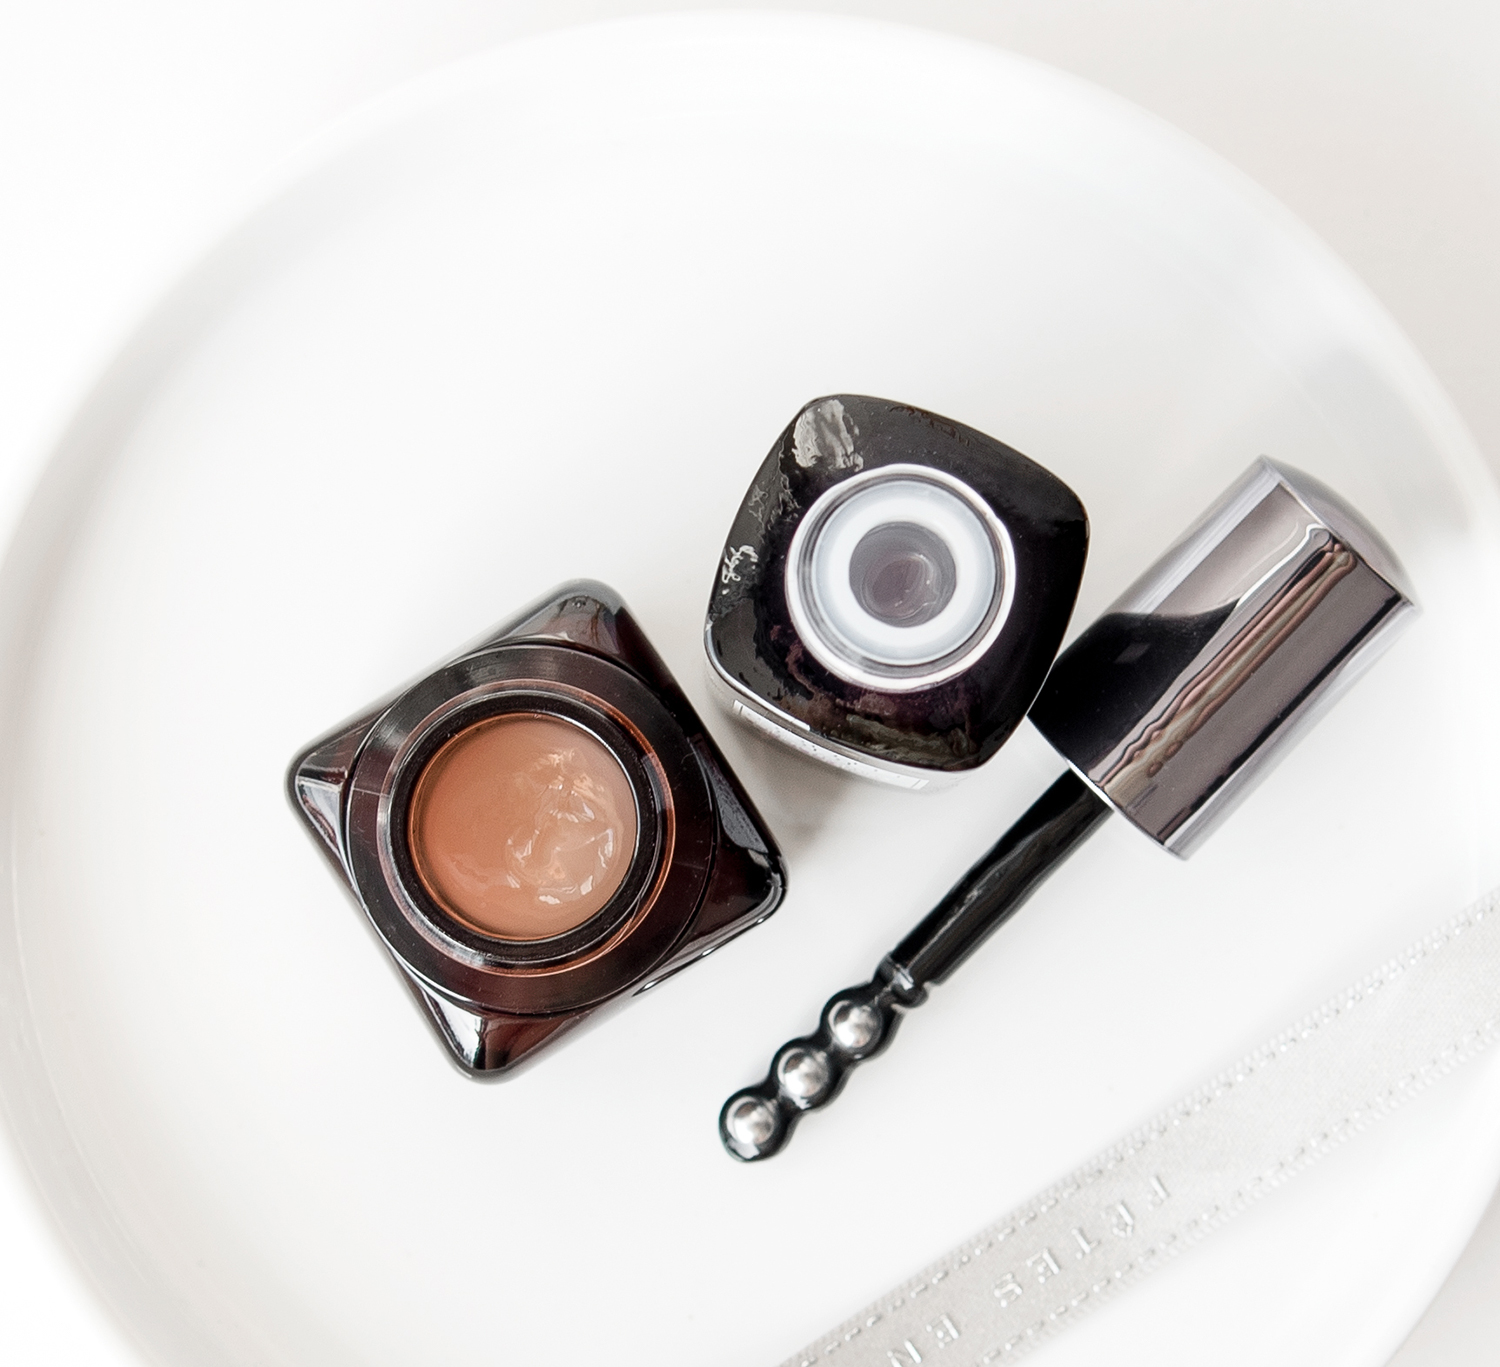 Estee Lauder Advanced Night Repair Eye Cream by The Skinny Scout